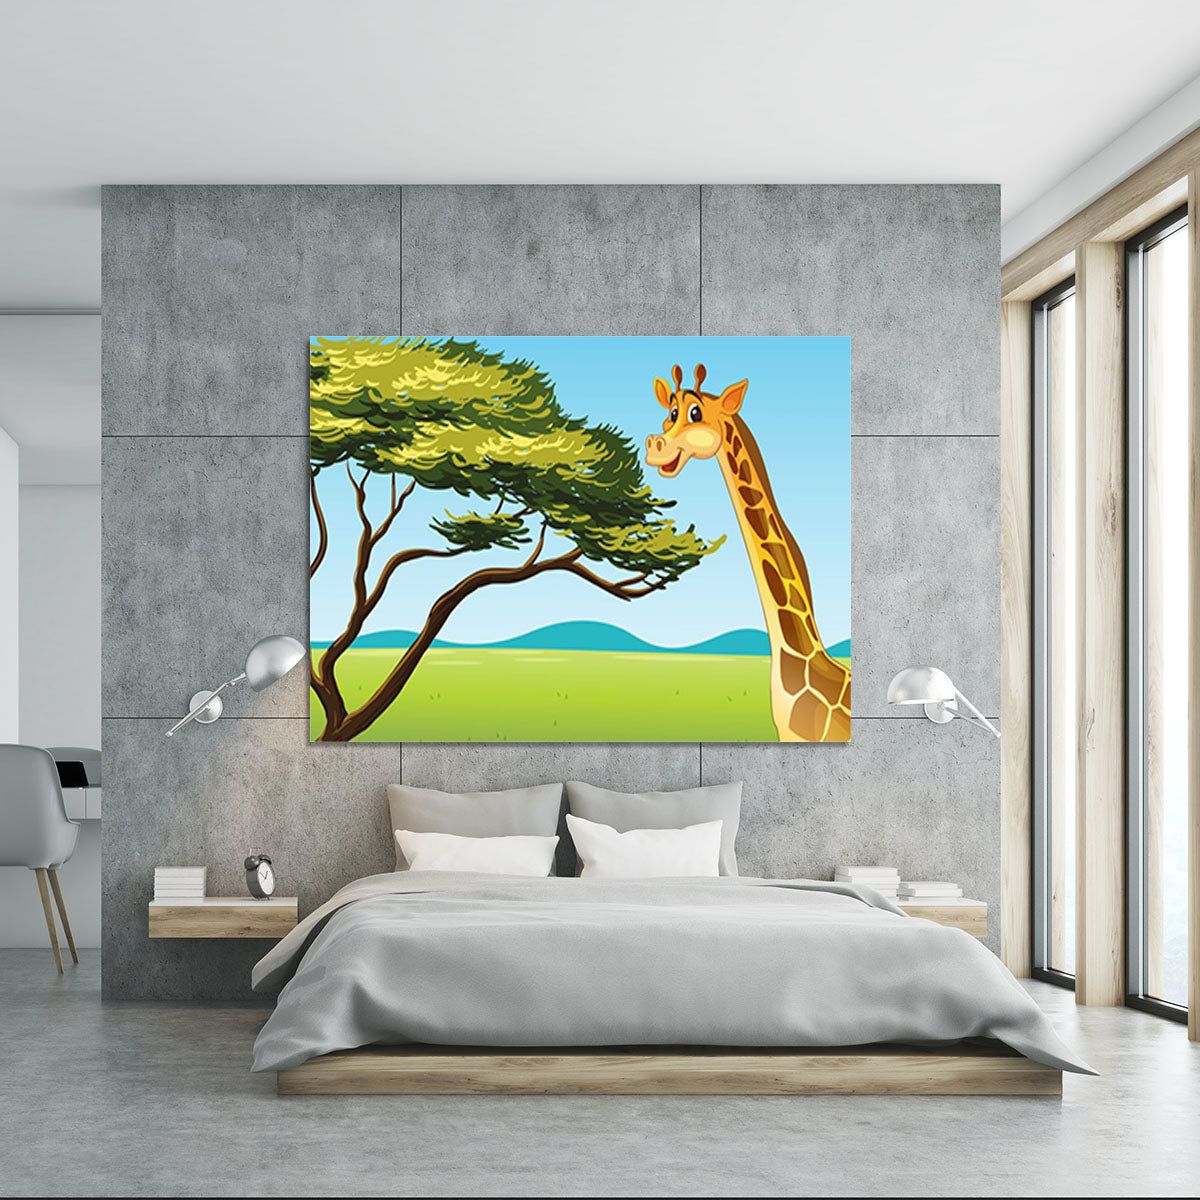 Illustration of a giraffe eating Canvas Print or Poster - Canvas Art Rocks - 5